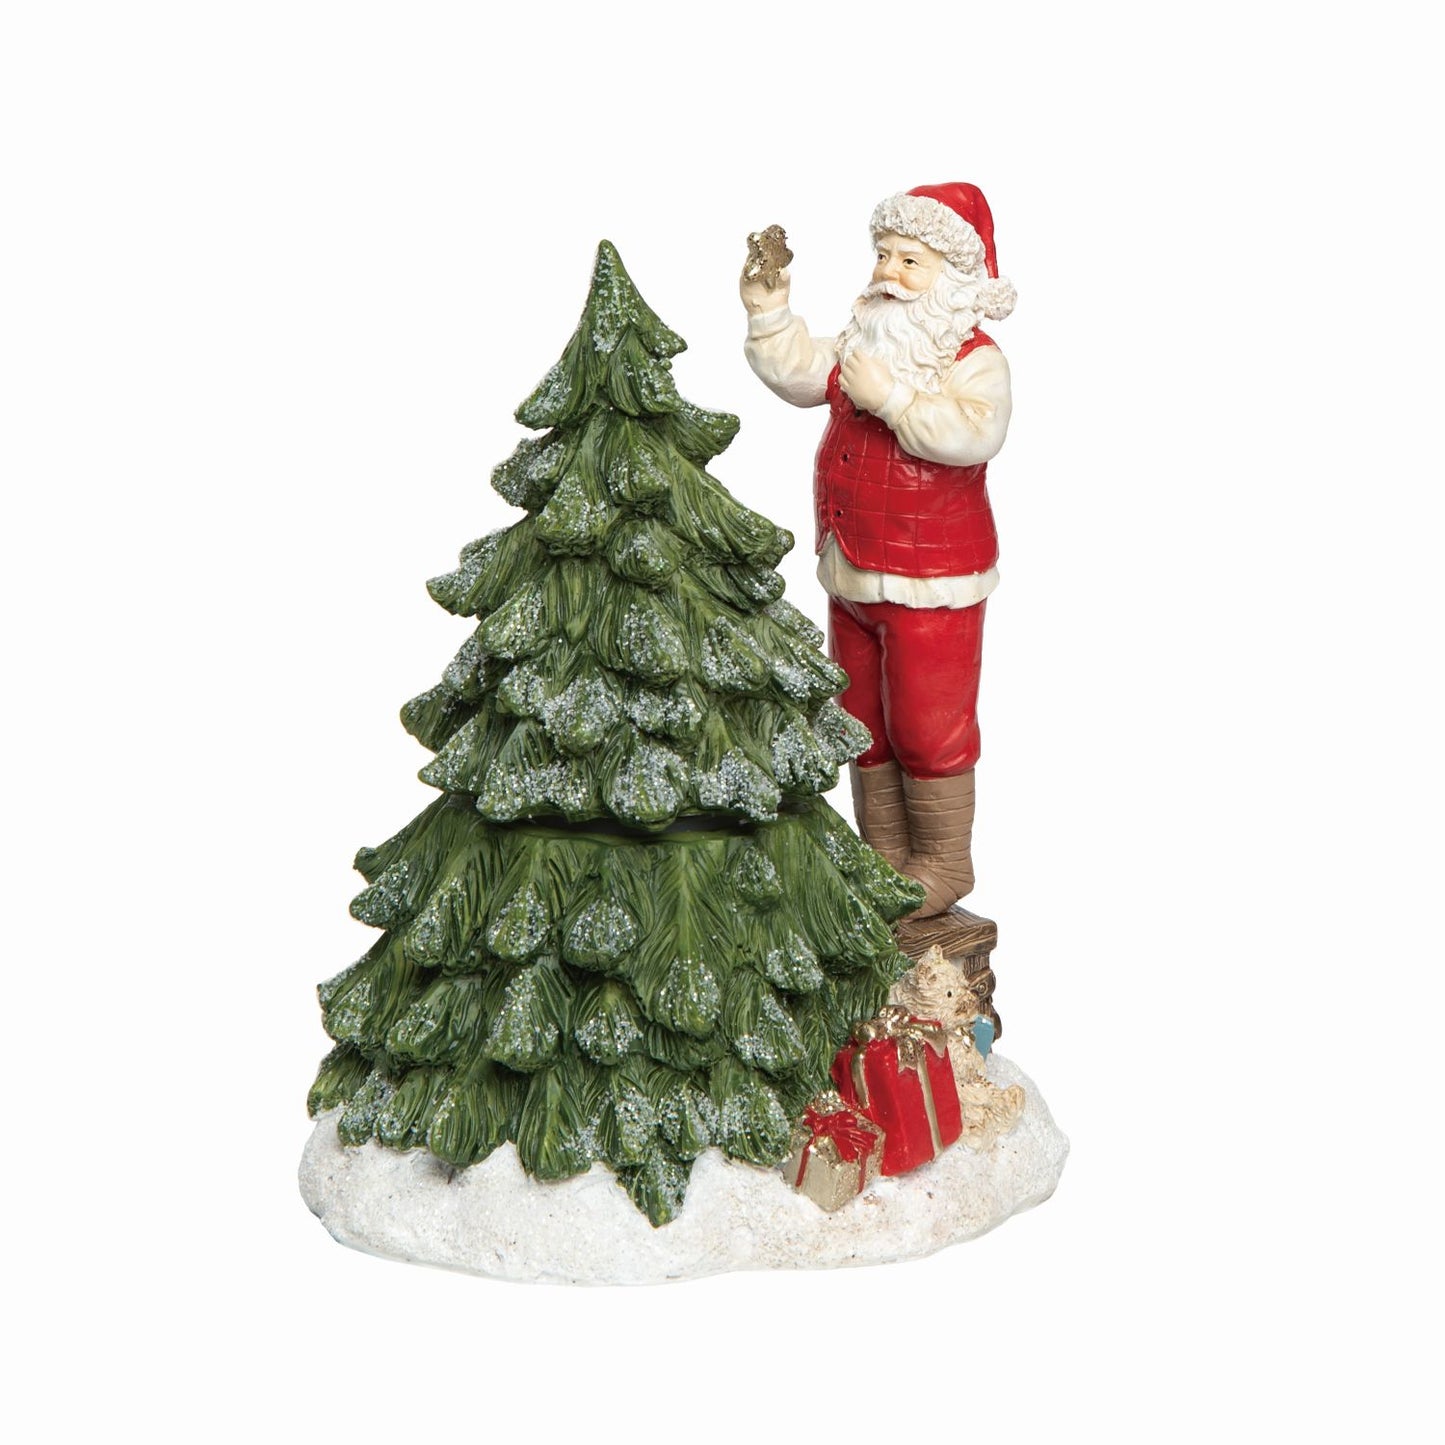 Transpac Resin Nostalgic Santa & Tree Music Box